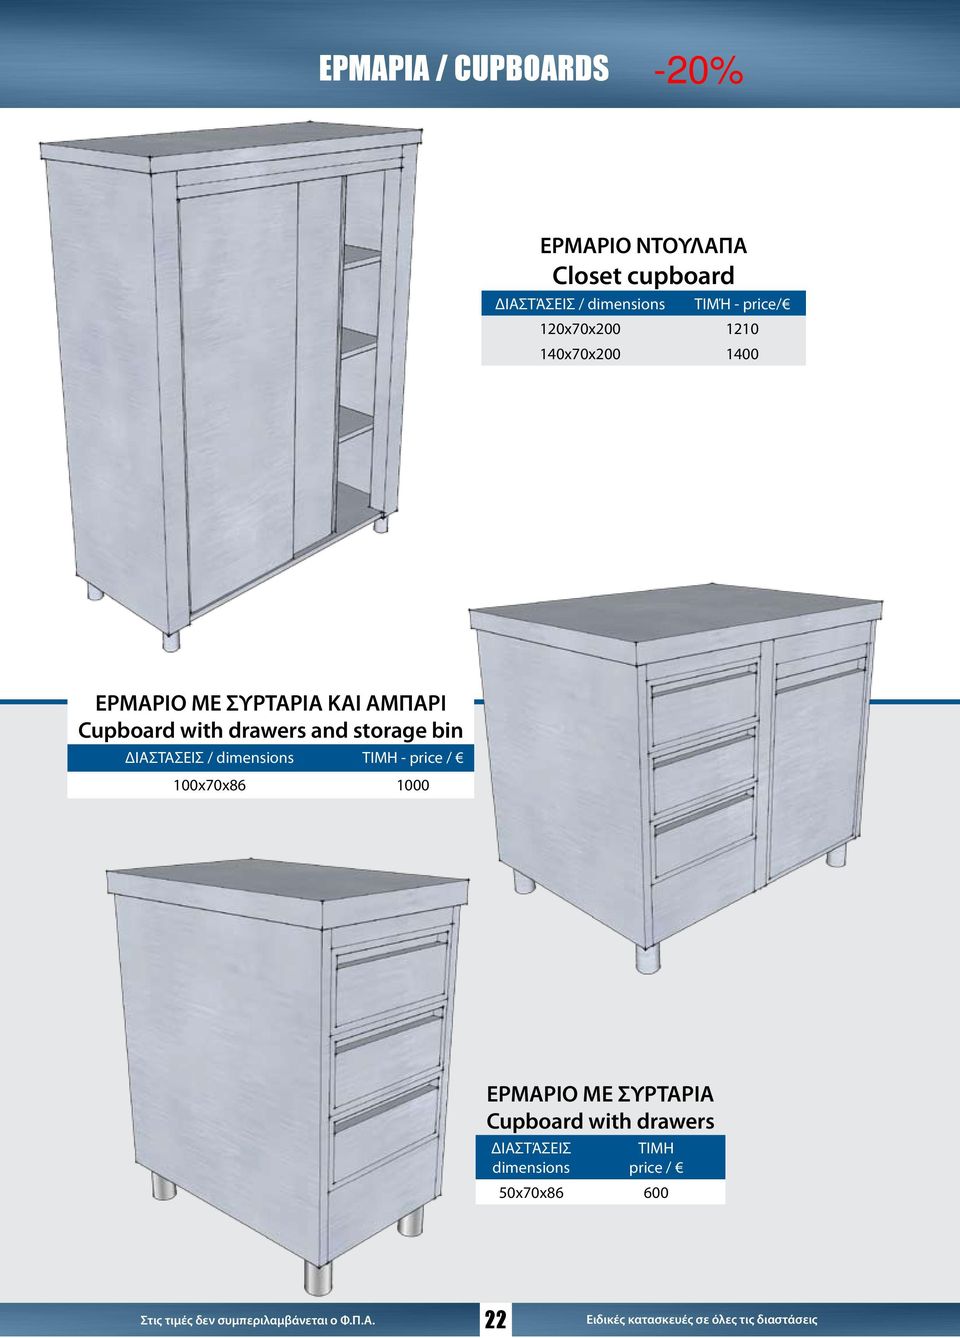 Cupboard with drawers and storage bin ΔΙΑΣΤAΣΕΙΣ / ΤΙΜH - price /